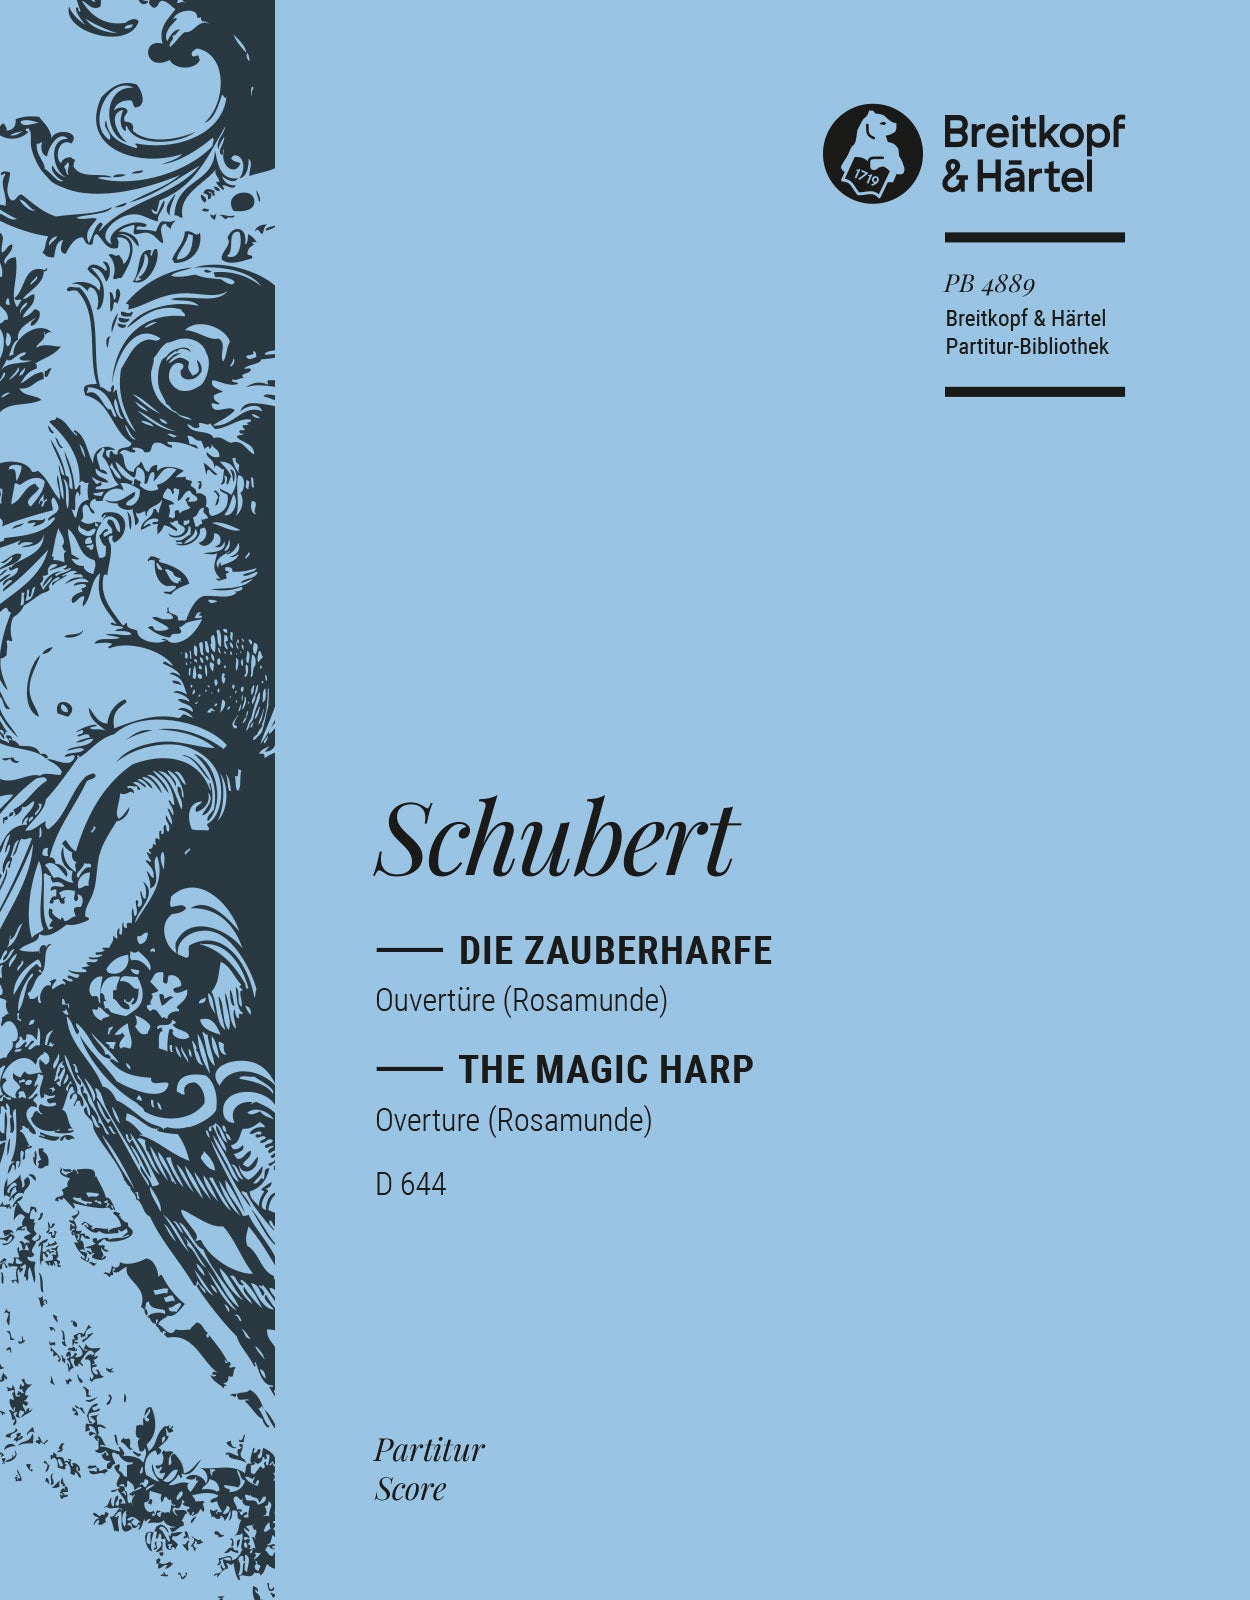 Schubert: Overture (Rosamunde) to Die Zauberharfe, D 644